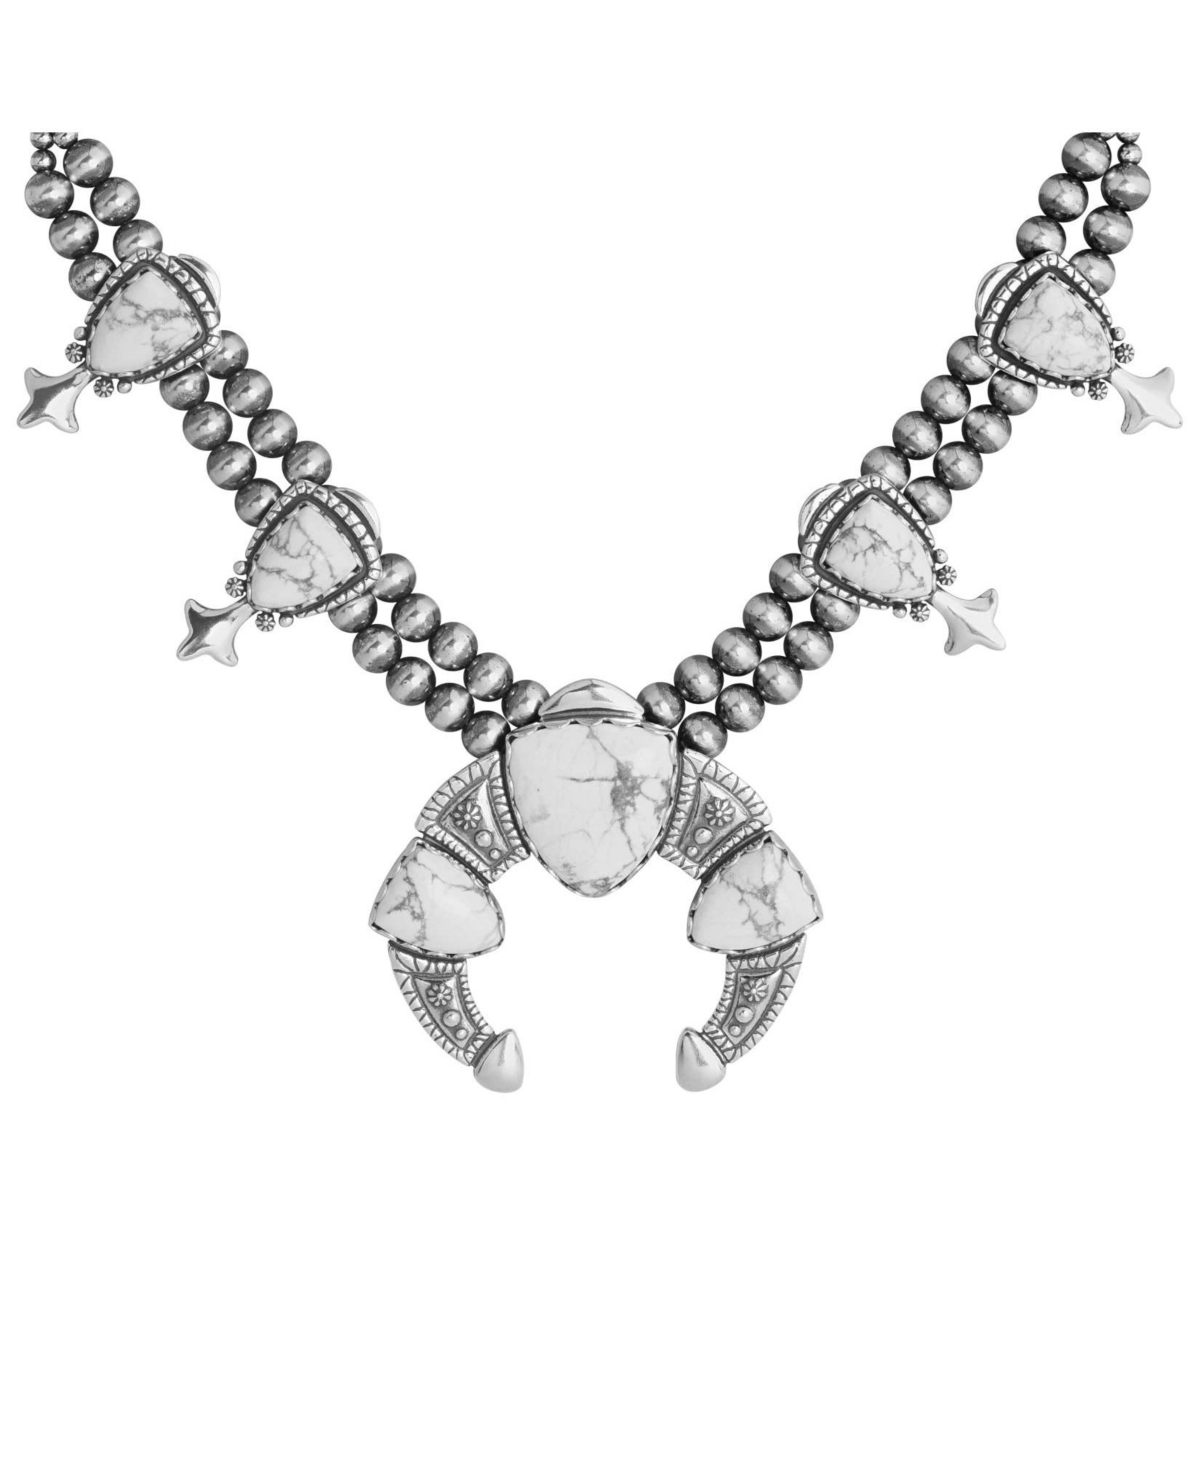 Sterling Silver Women's Necklace Genuine Gemstone Squash Blossom Design 18 to 21 Inch - White howlite